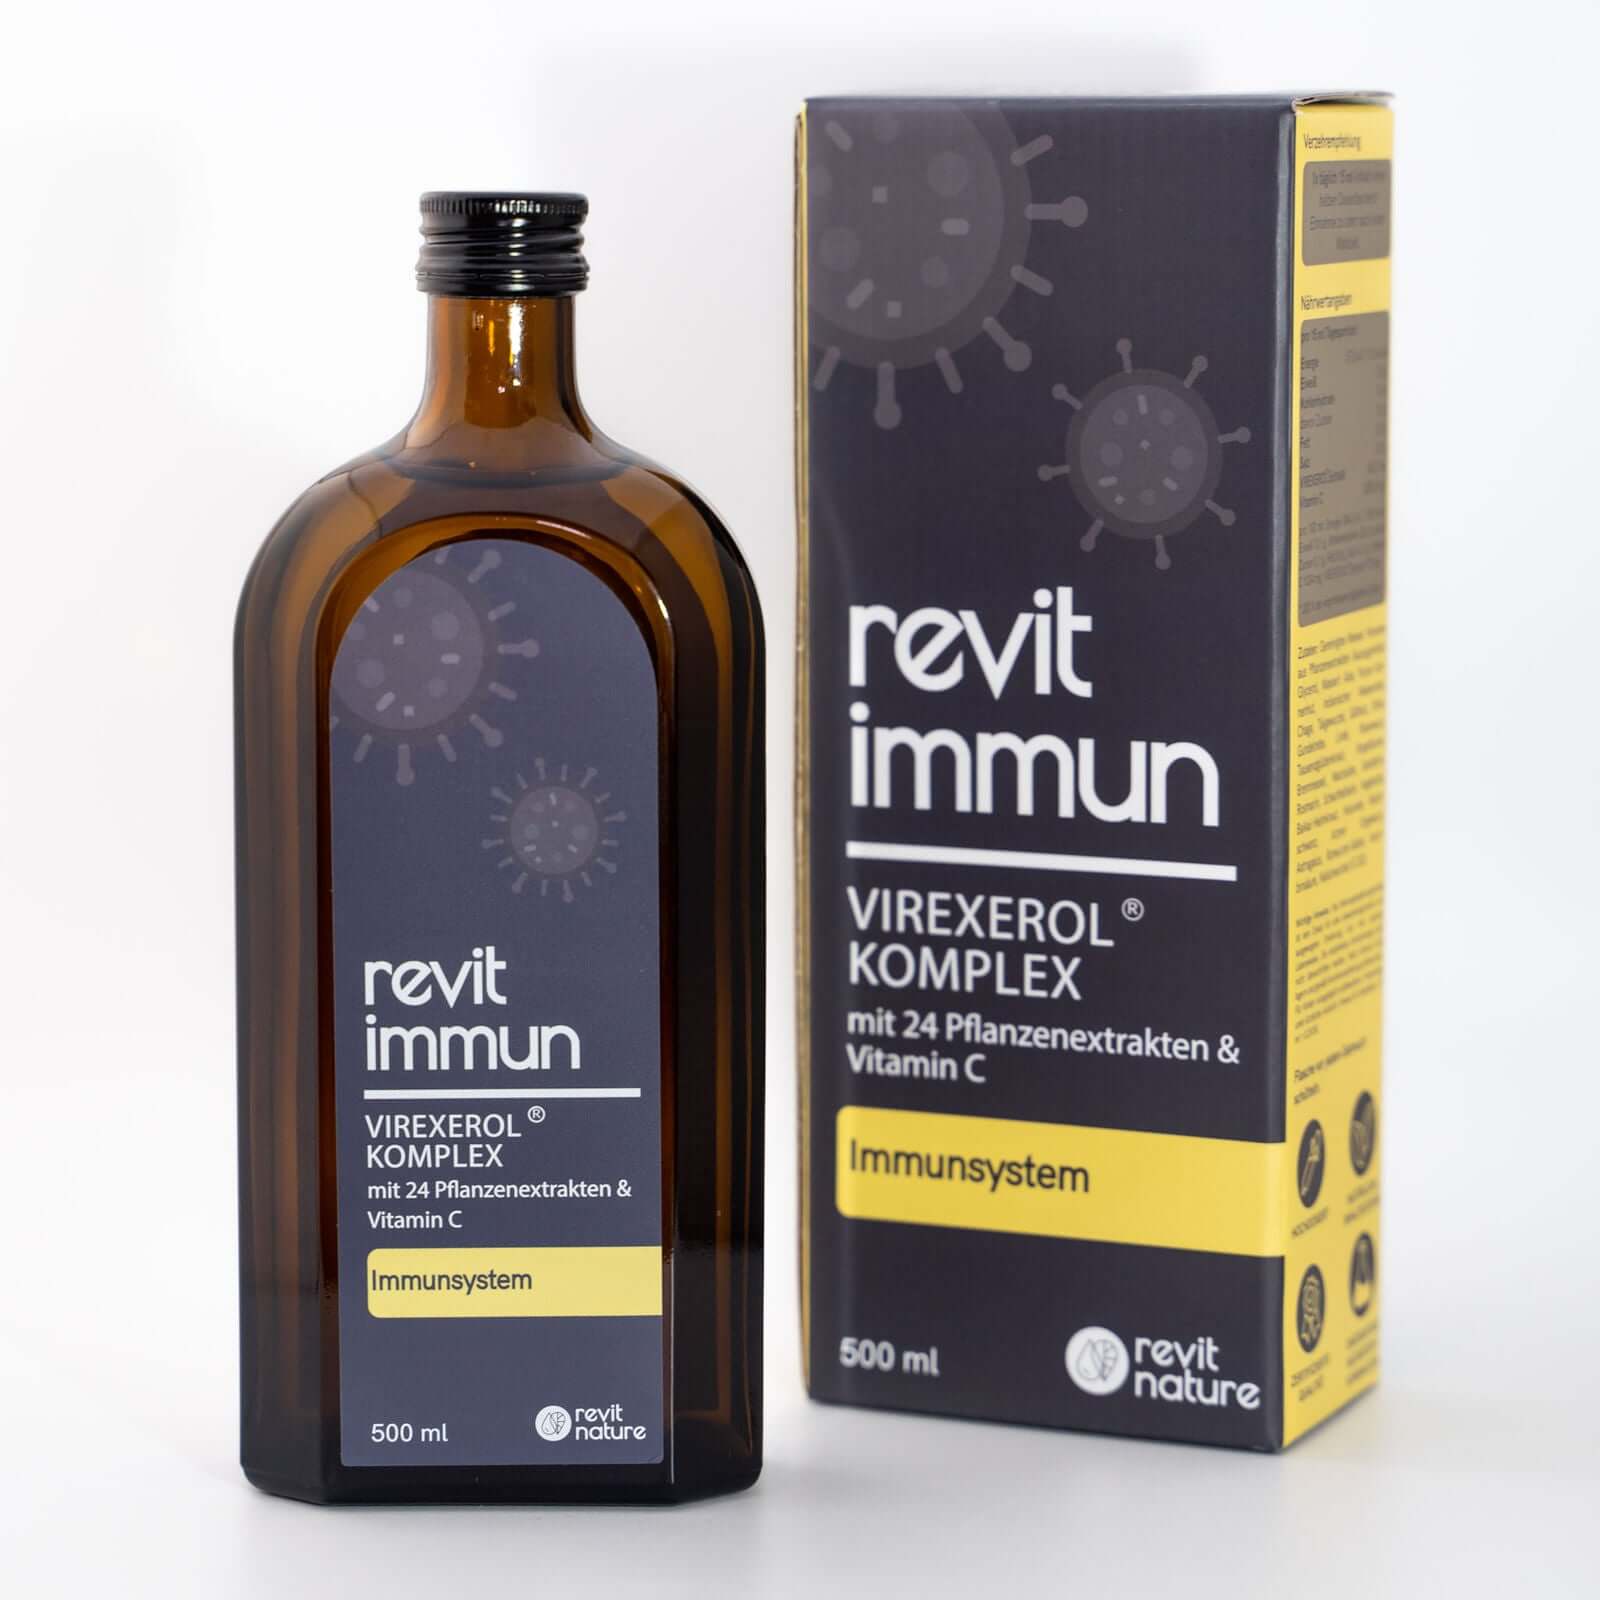 REVIT IMMUN - Immunsystem